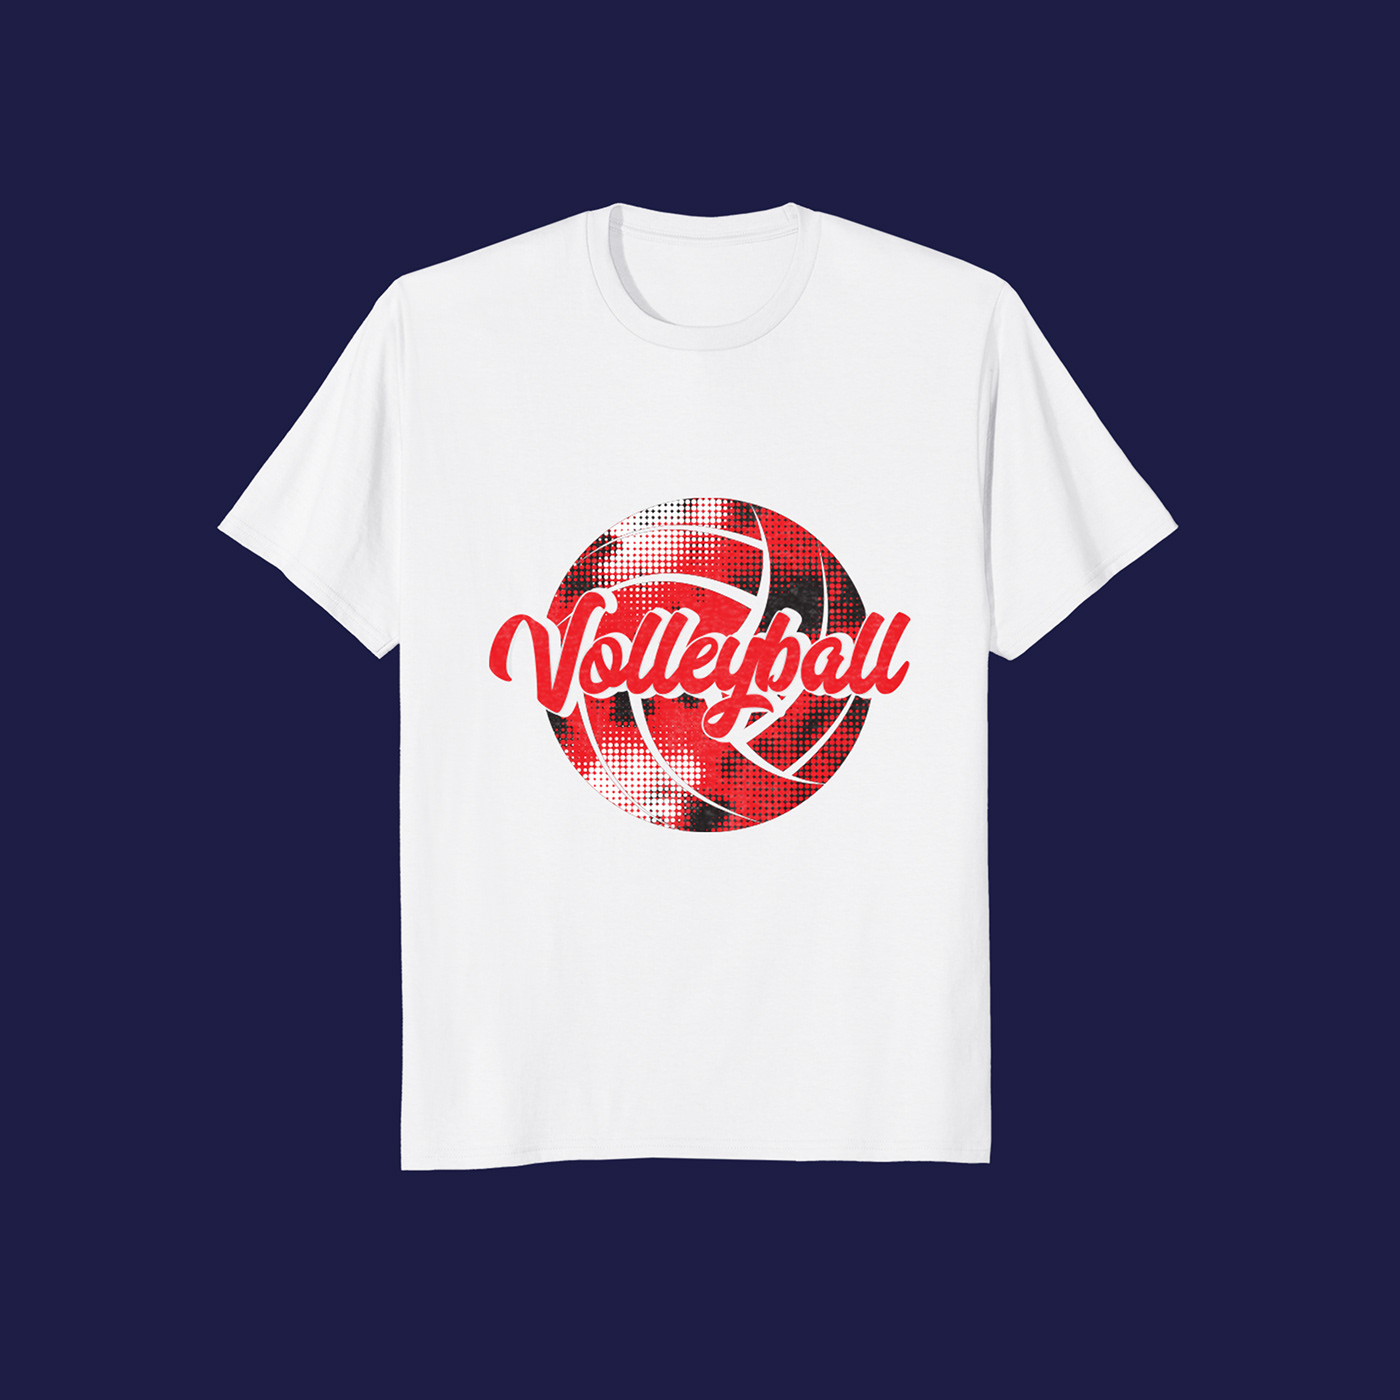 Sports Design volleyball design volleyball sports graphic t shirt T-Shirt Design t-shirts white tshirt Sports Uniform volleyball t shirt design